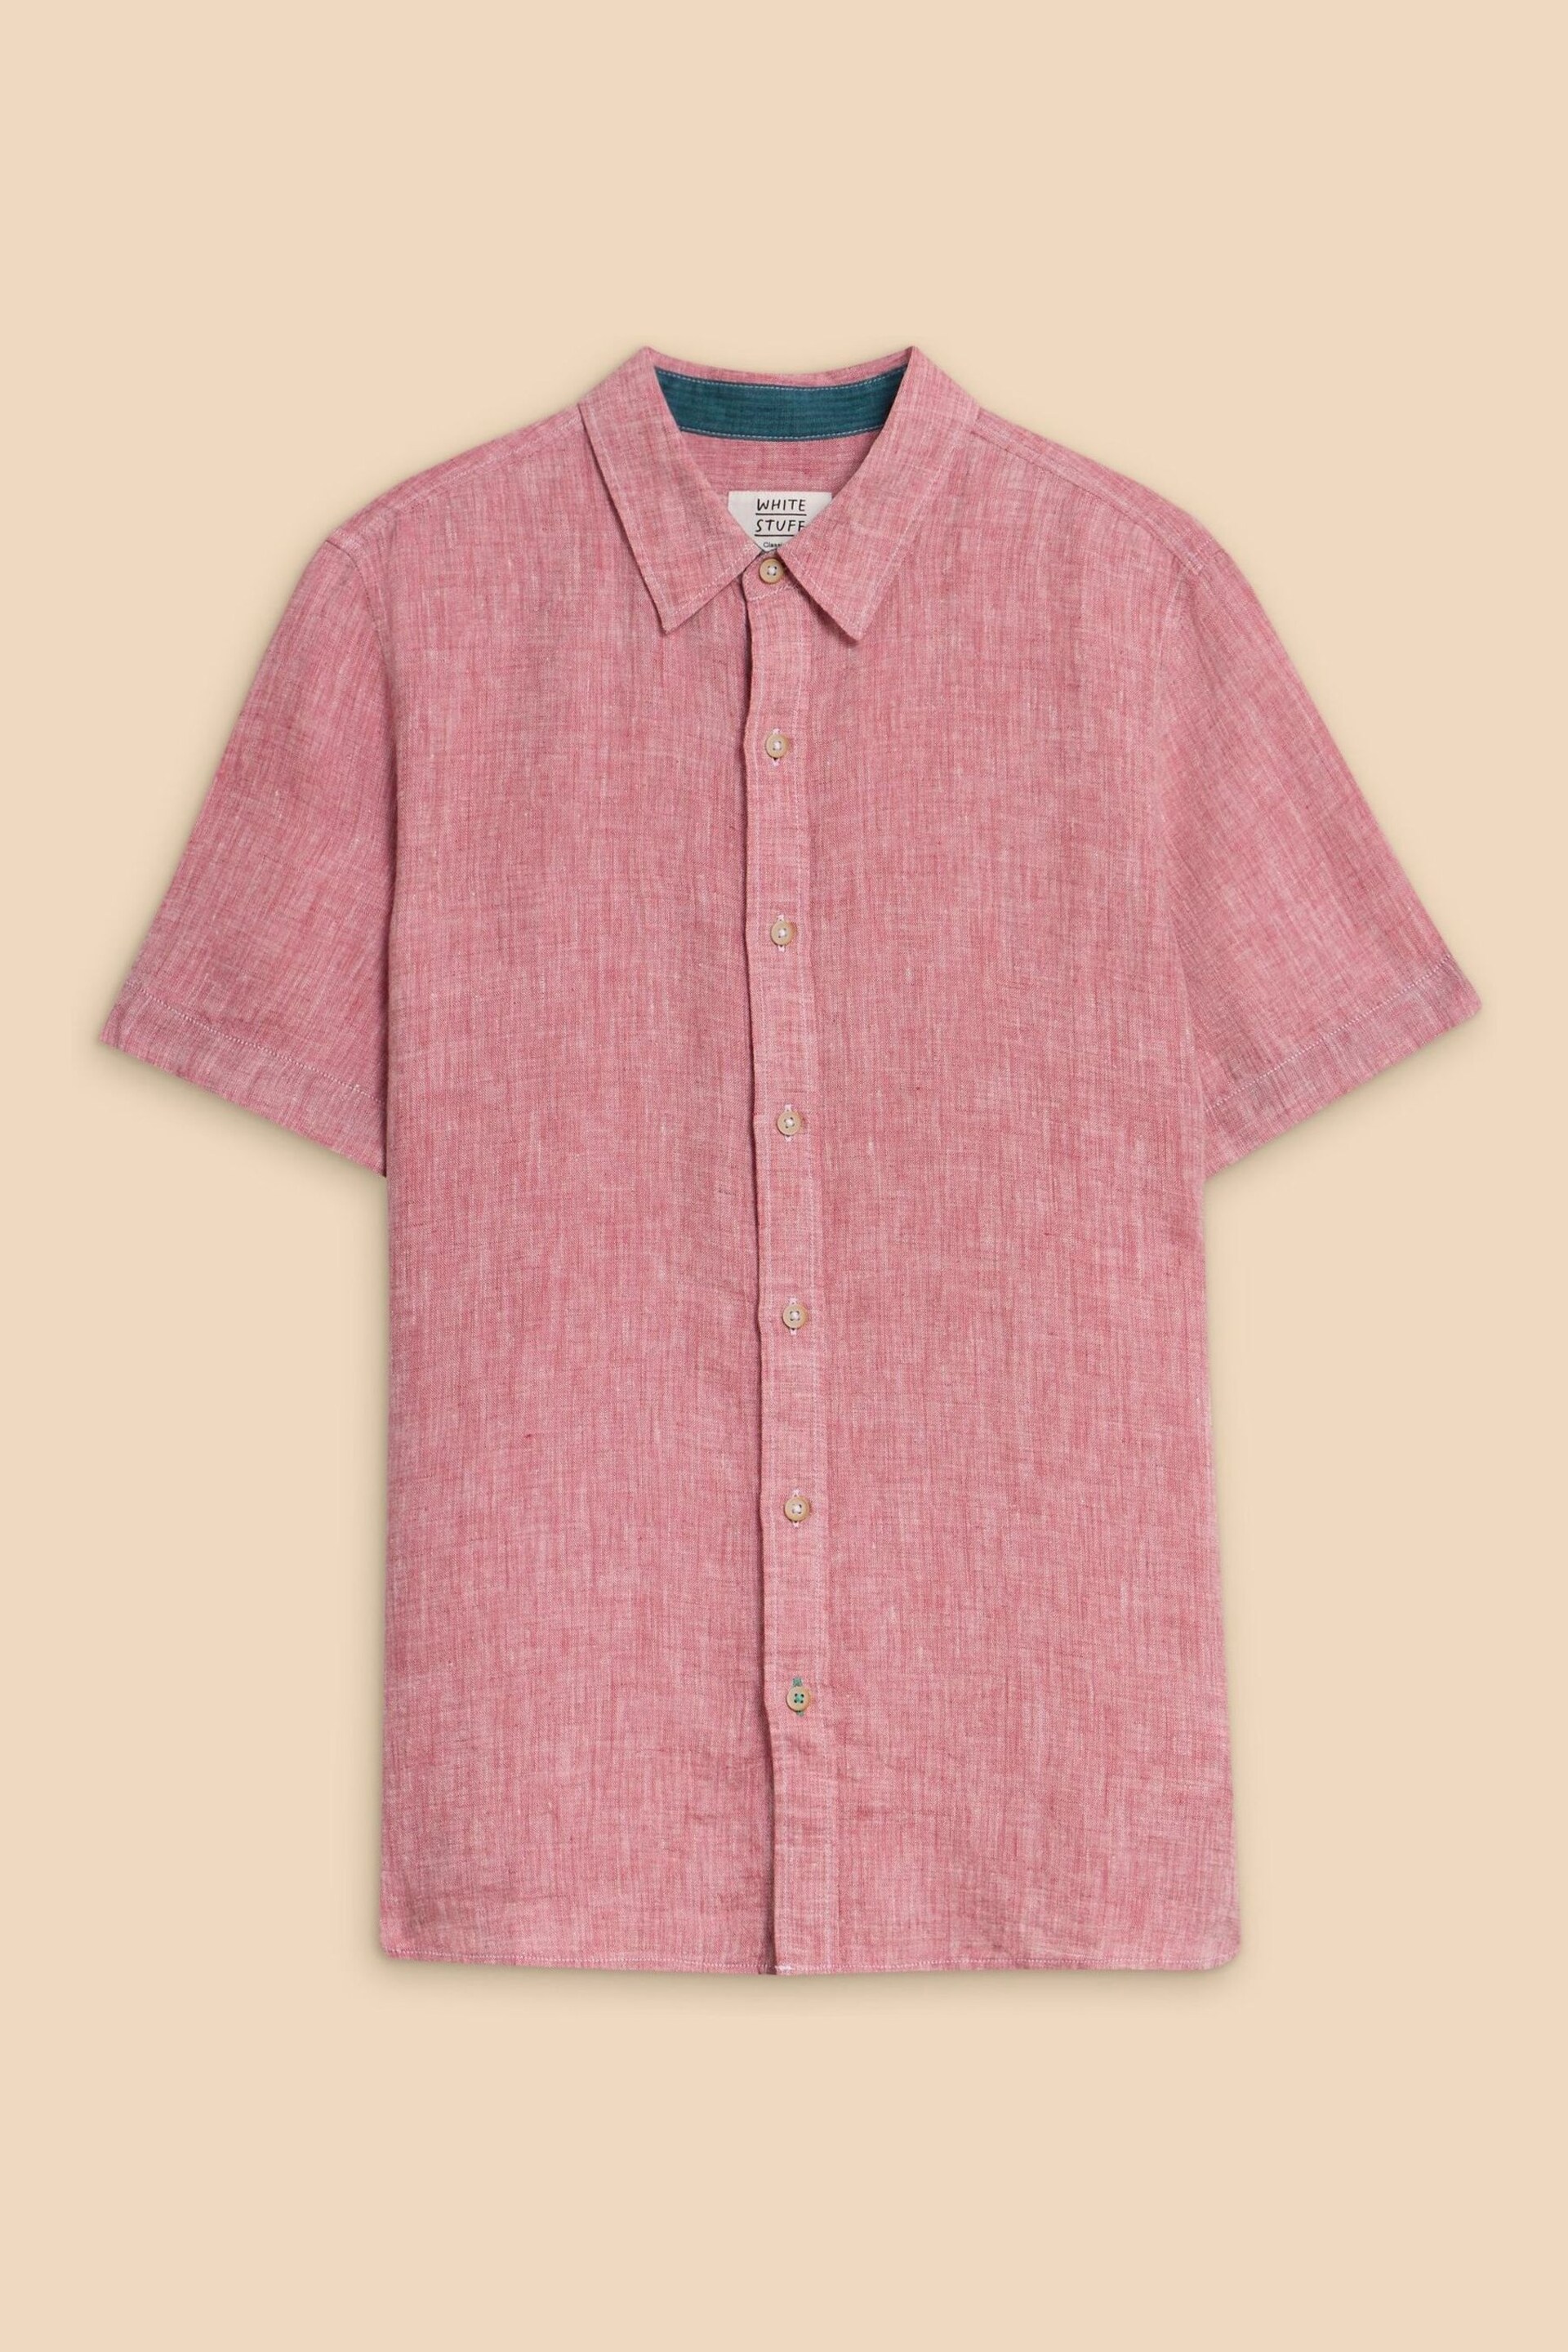 White Stuff Pink Pembroke Linen Shirt - Image 5 of 7